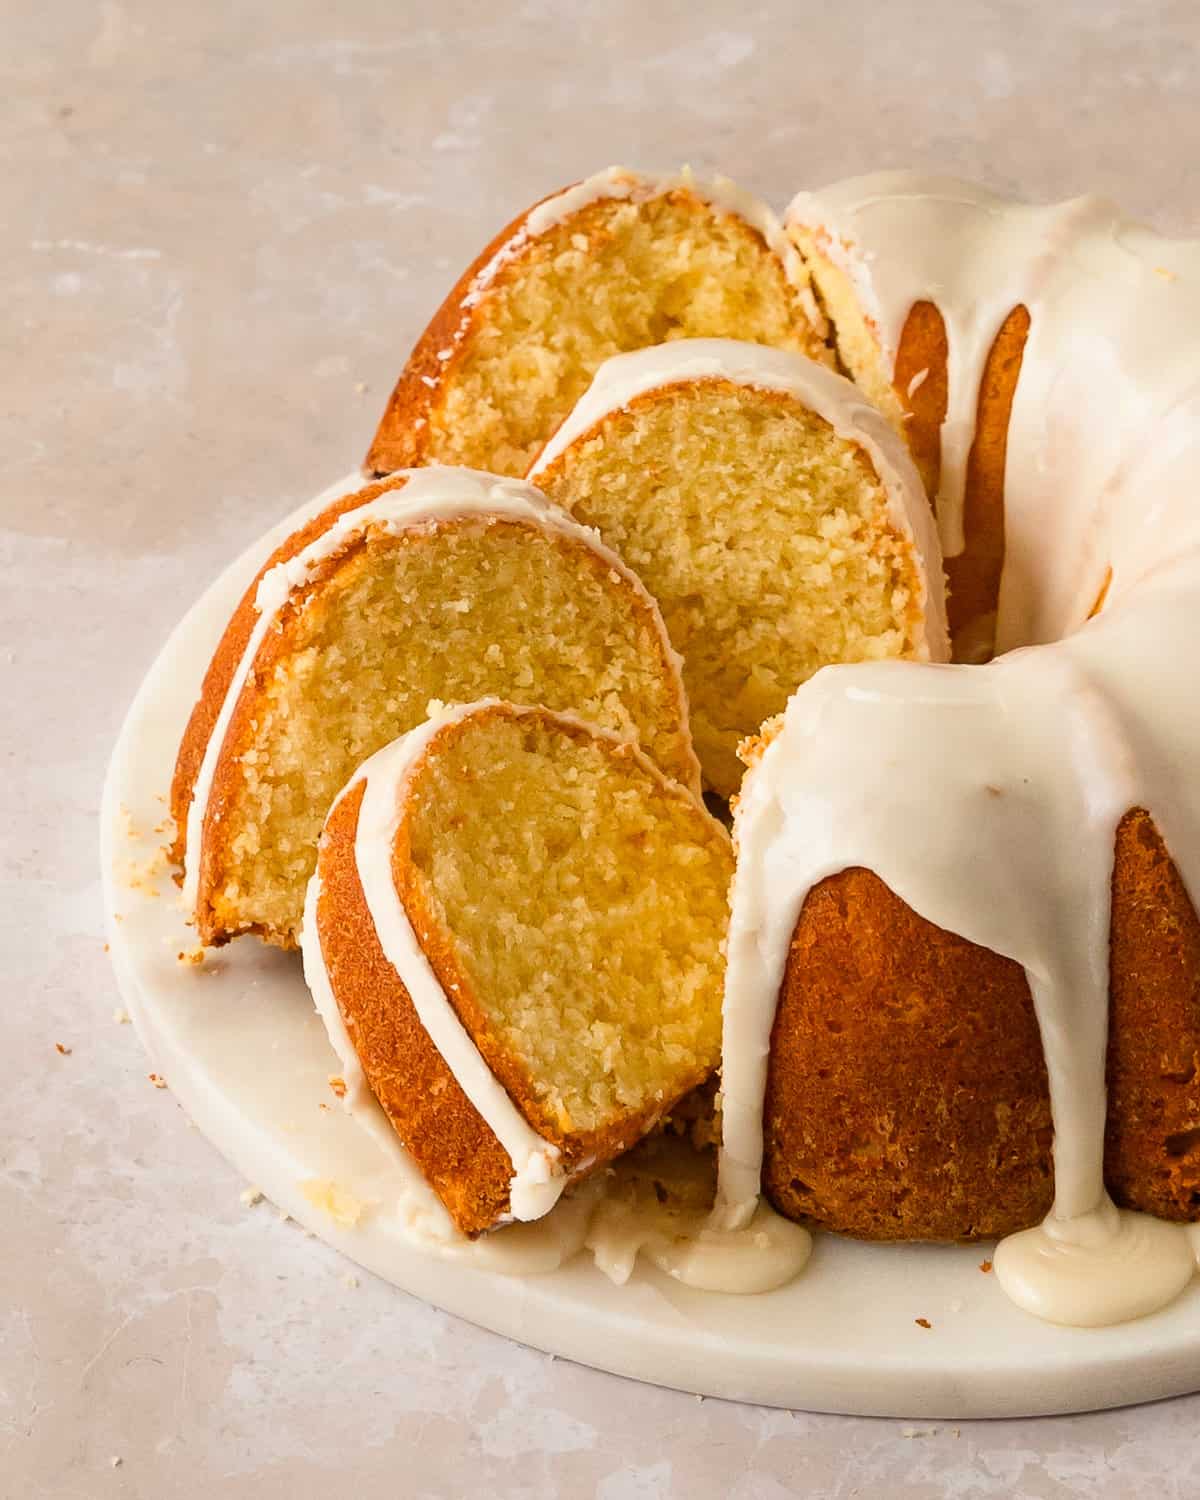 Lemonade bundt cake with lemon glaze on a serving plate.